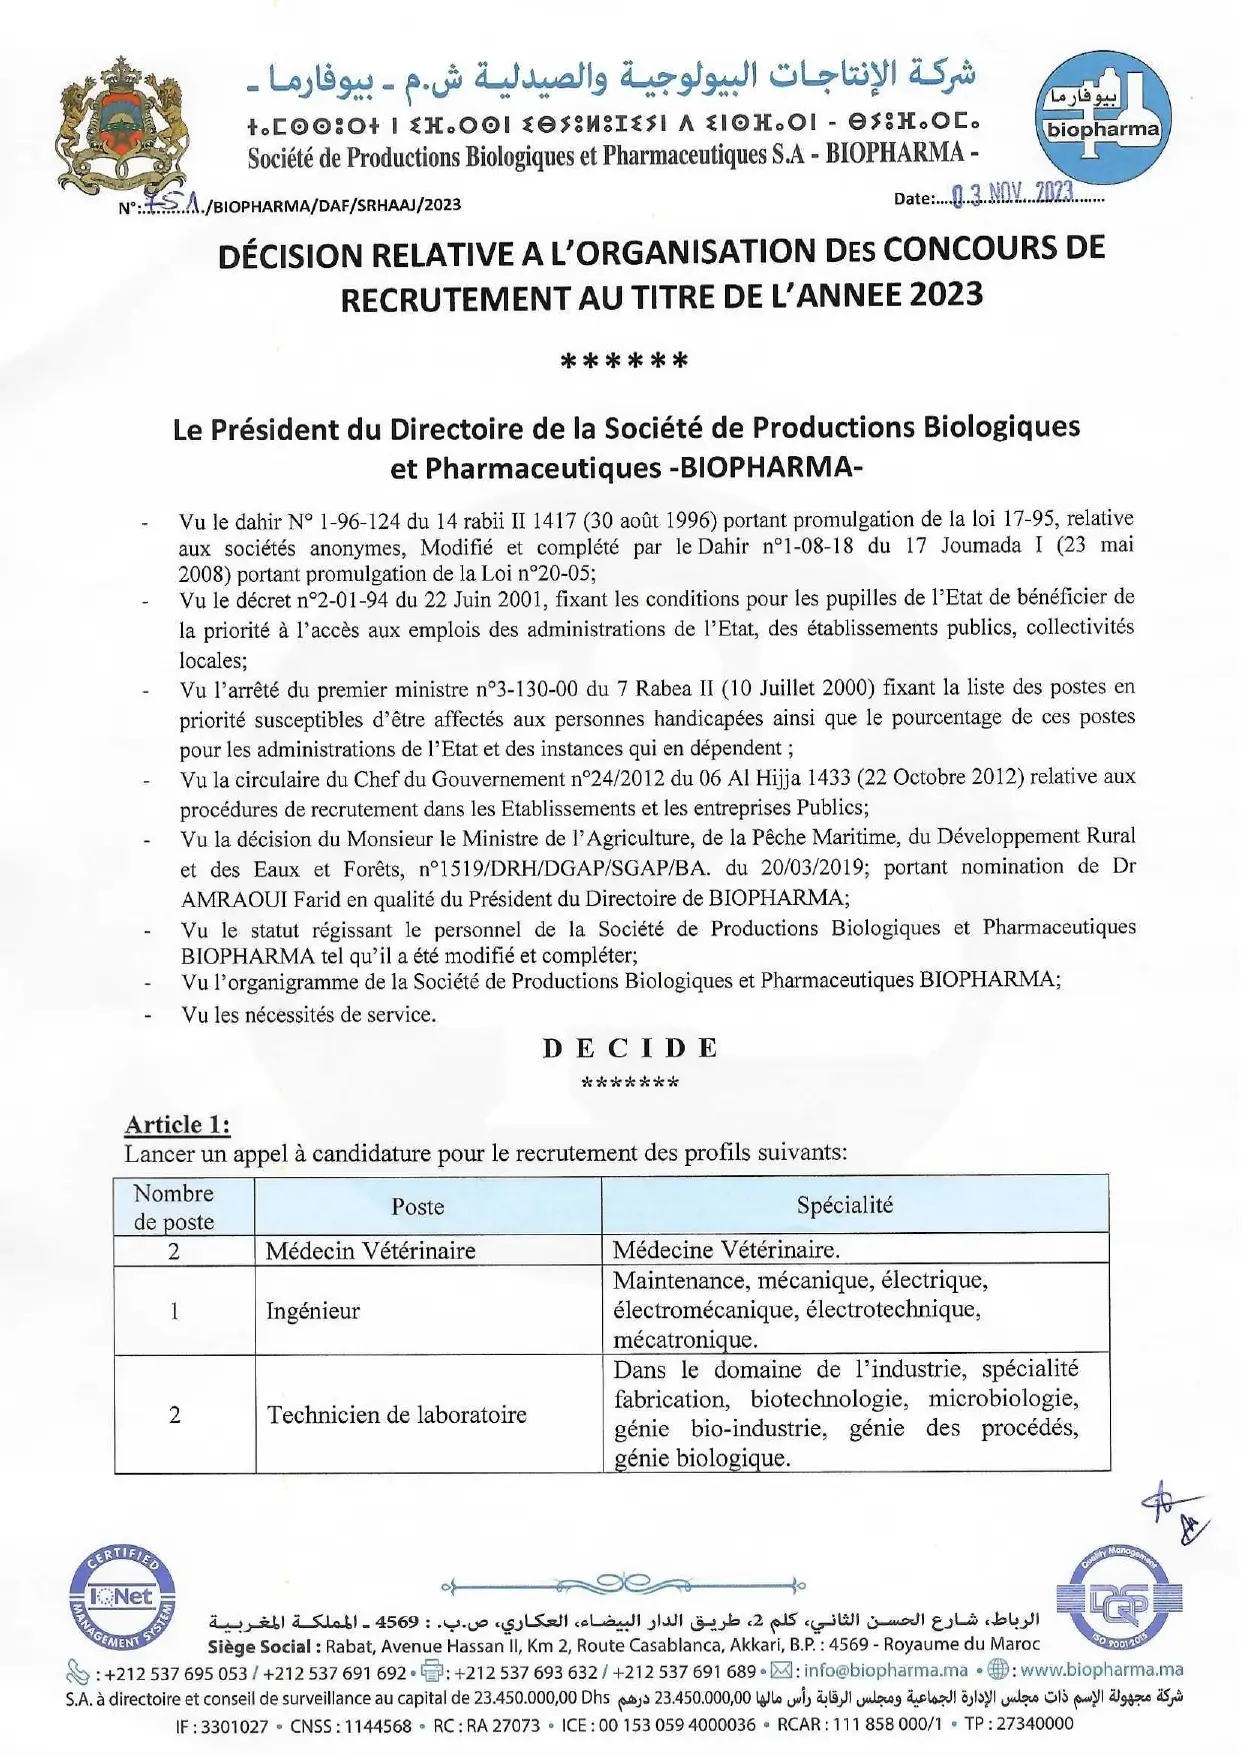 Concours de recrutement Biopharma 2023 (05 postes)